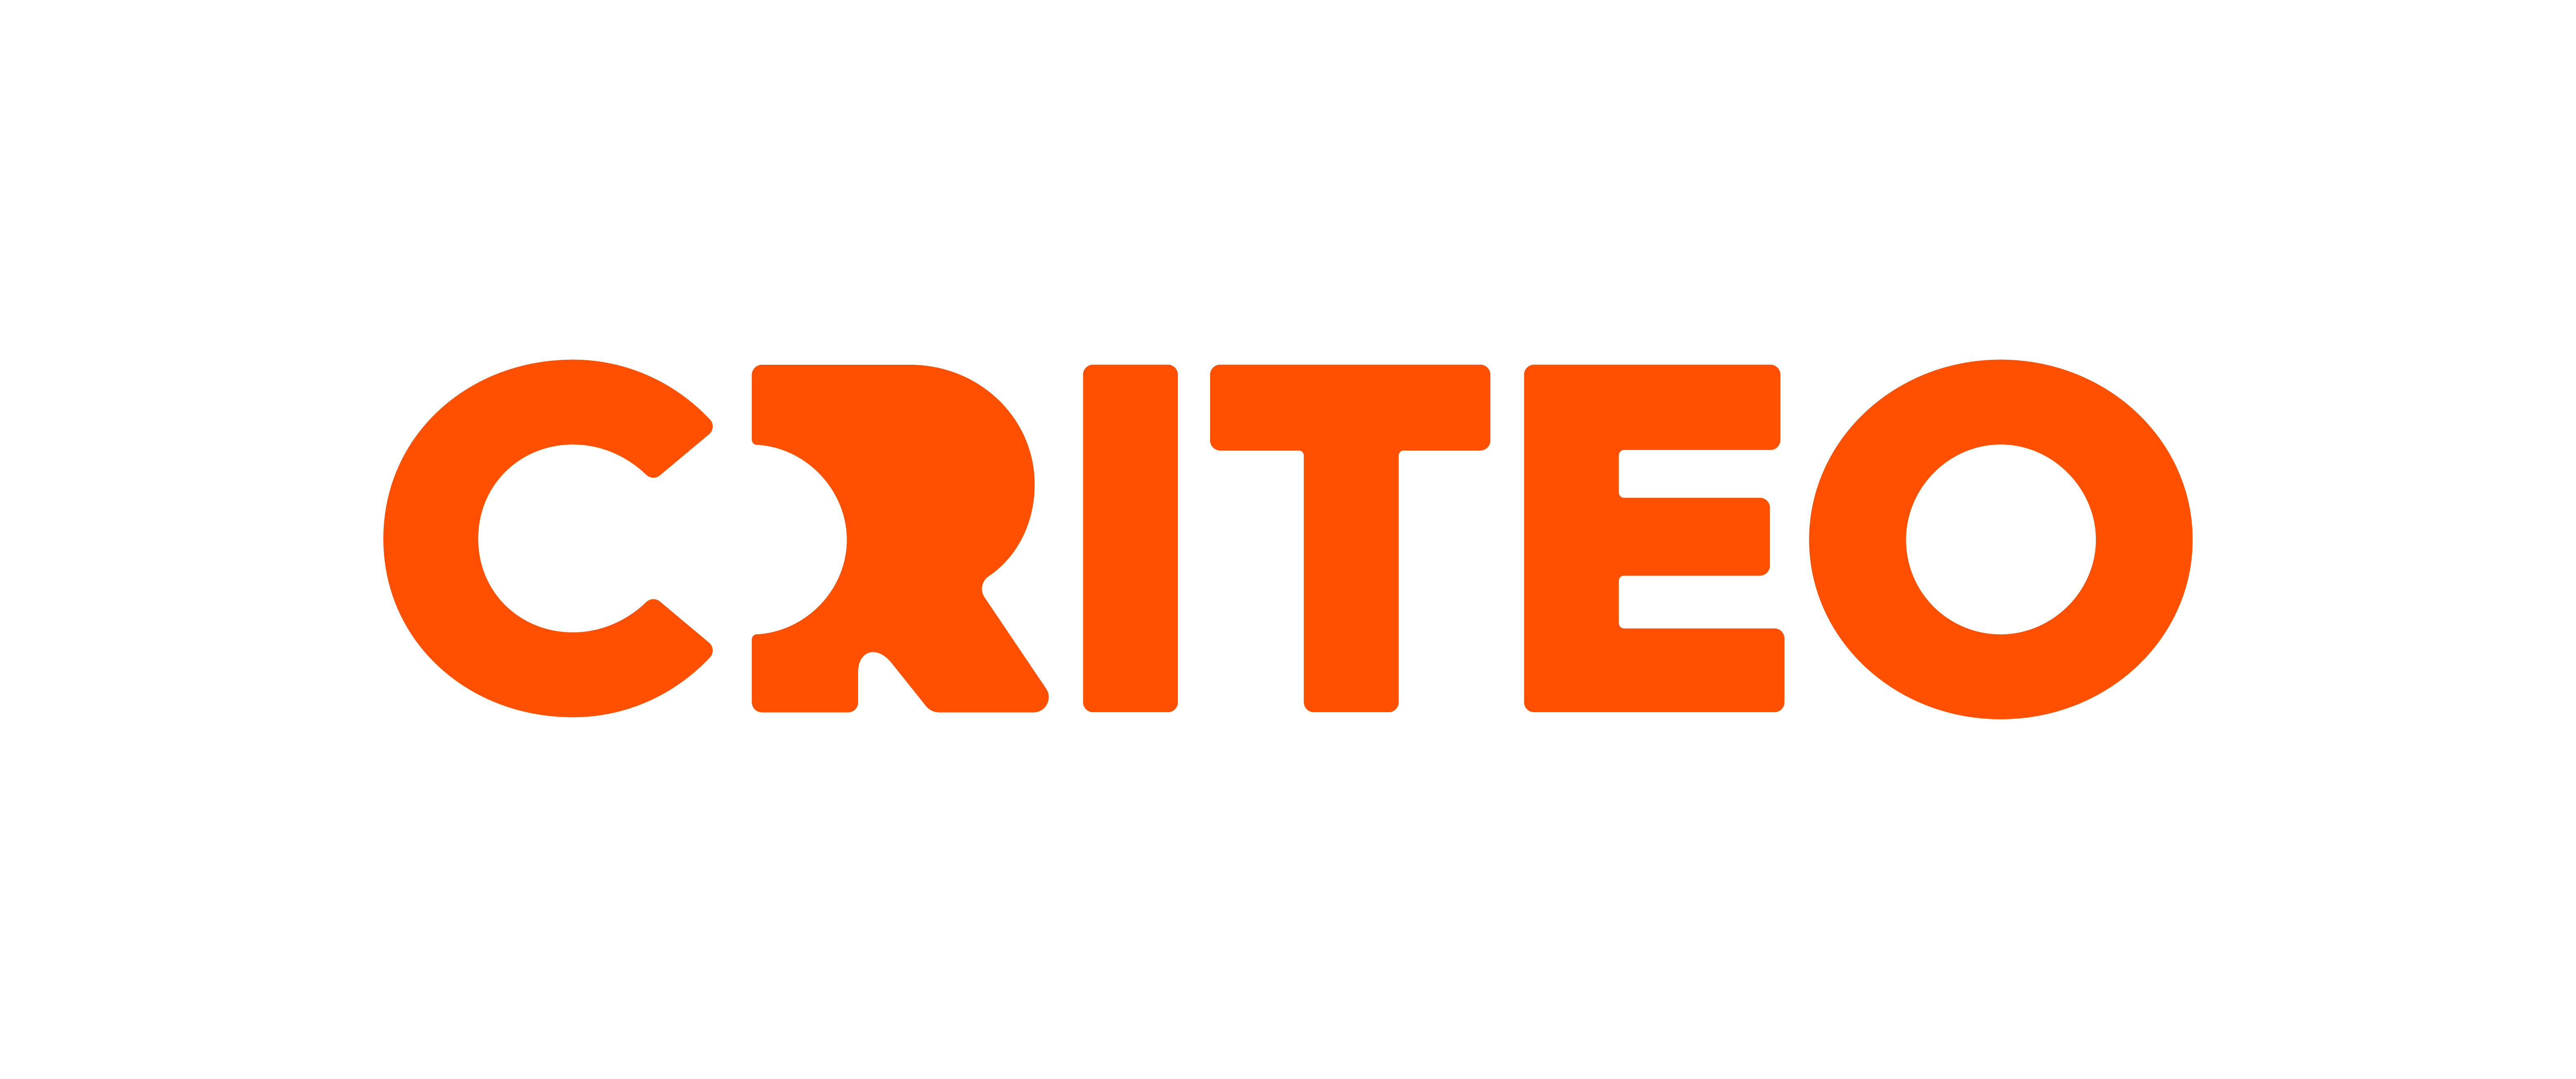 Criteo-Logo-Orange-300.jpg